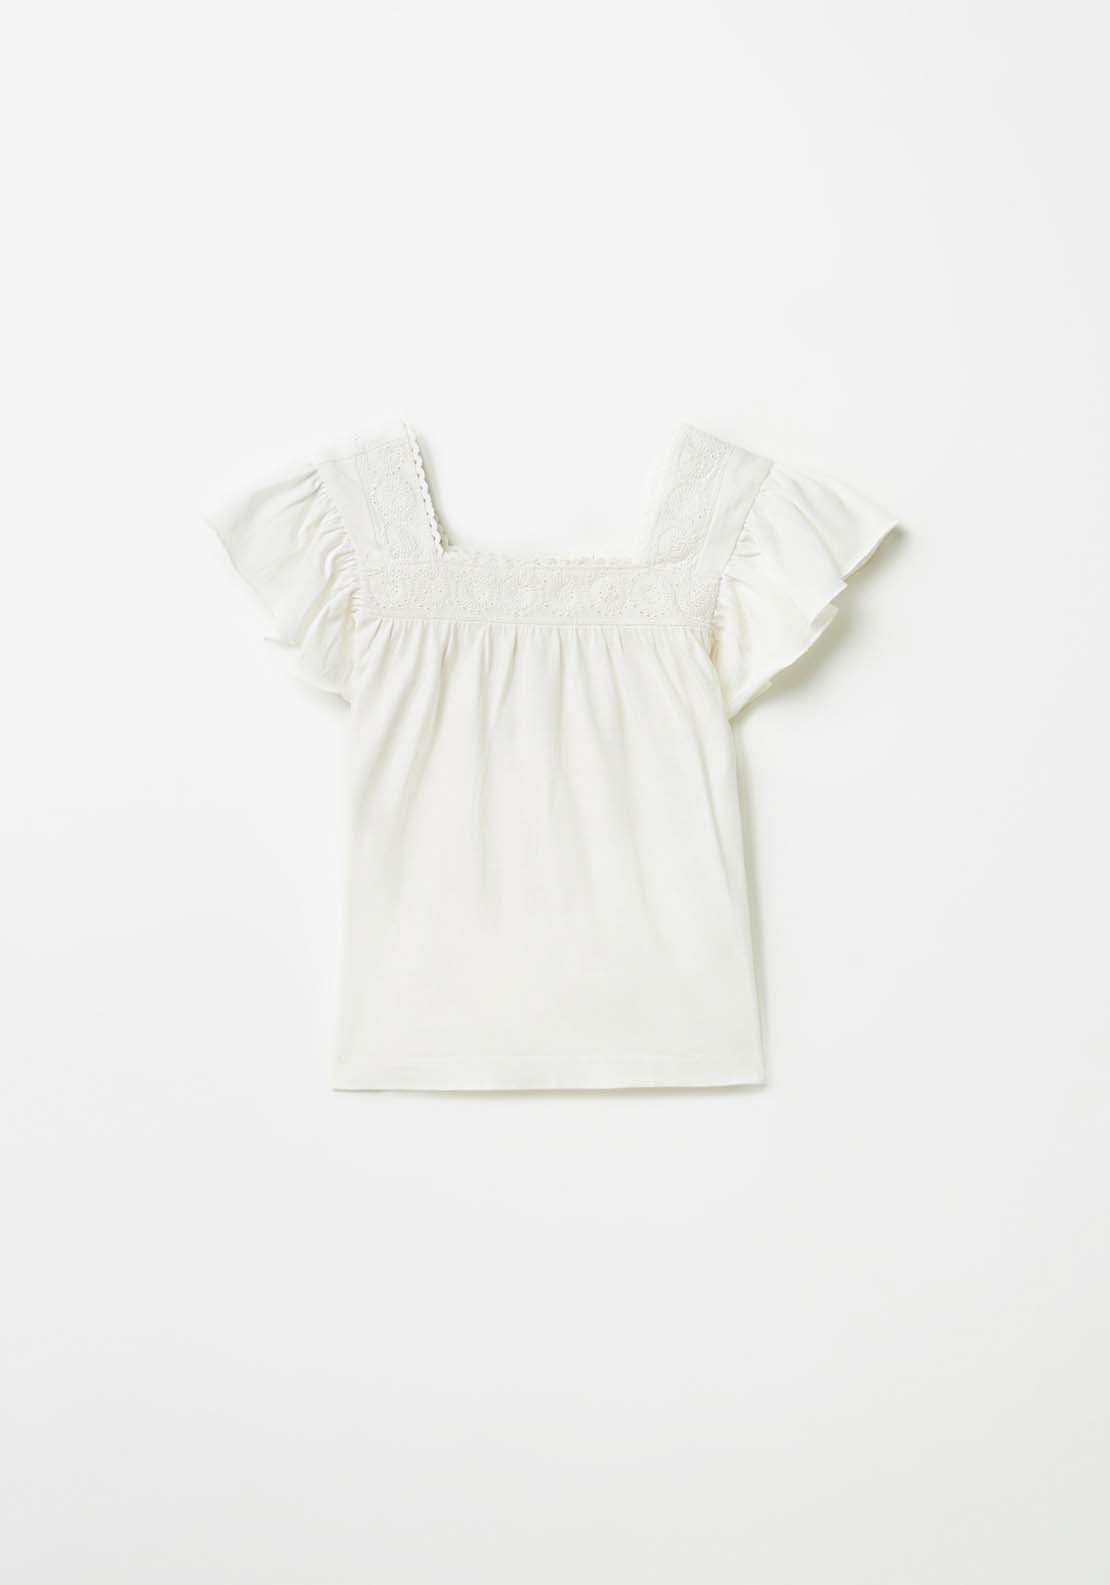 Sfera T-Shirt Square Embod Neck - White 2 Shaws Department Stores